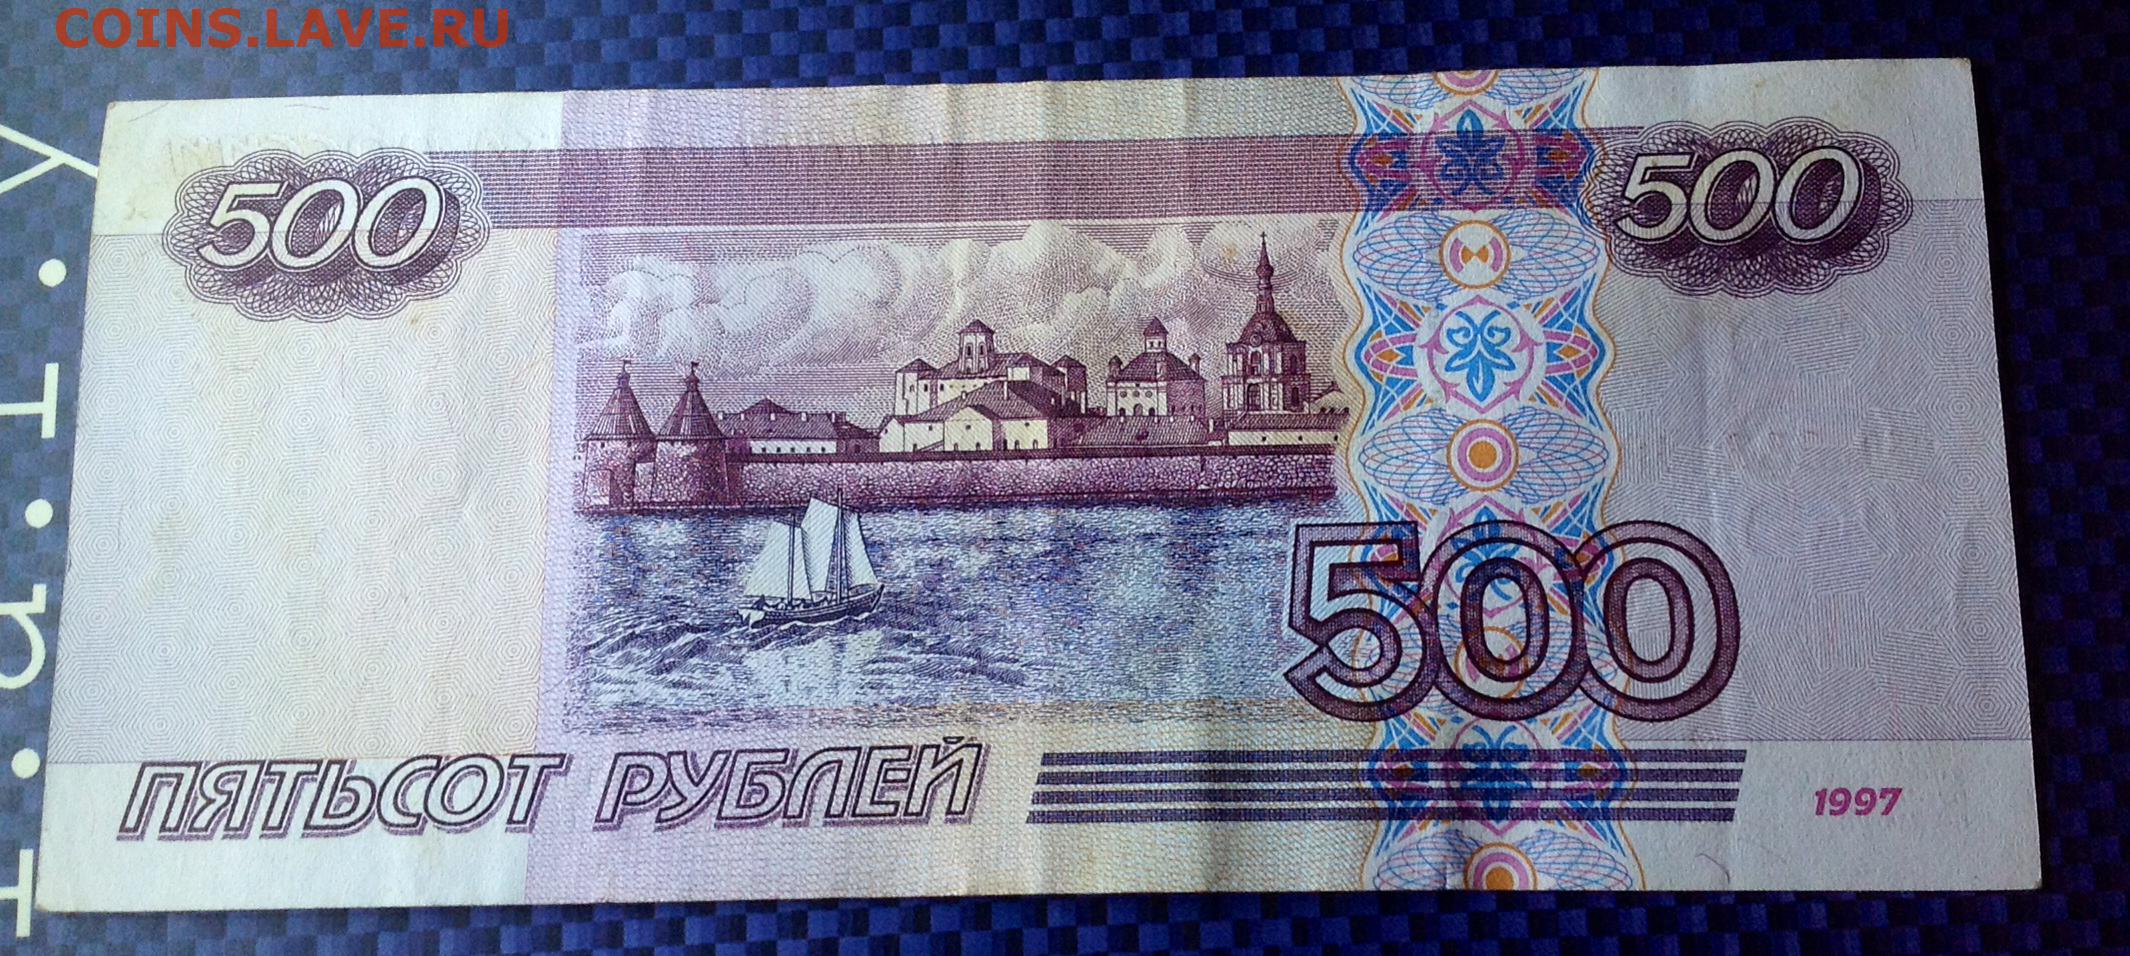 500 рублей 900. 500 Рублей 1997 модификация 2001. 500 Рублей 1997 года модификация 2001. 500 Рублей 2001 года модификации. 500 Рублей 1997 года бумажные модификация 2001.